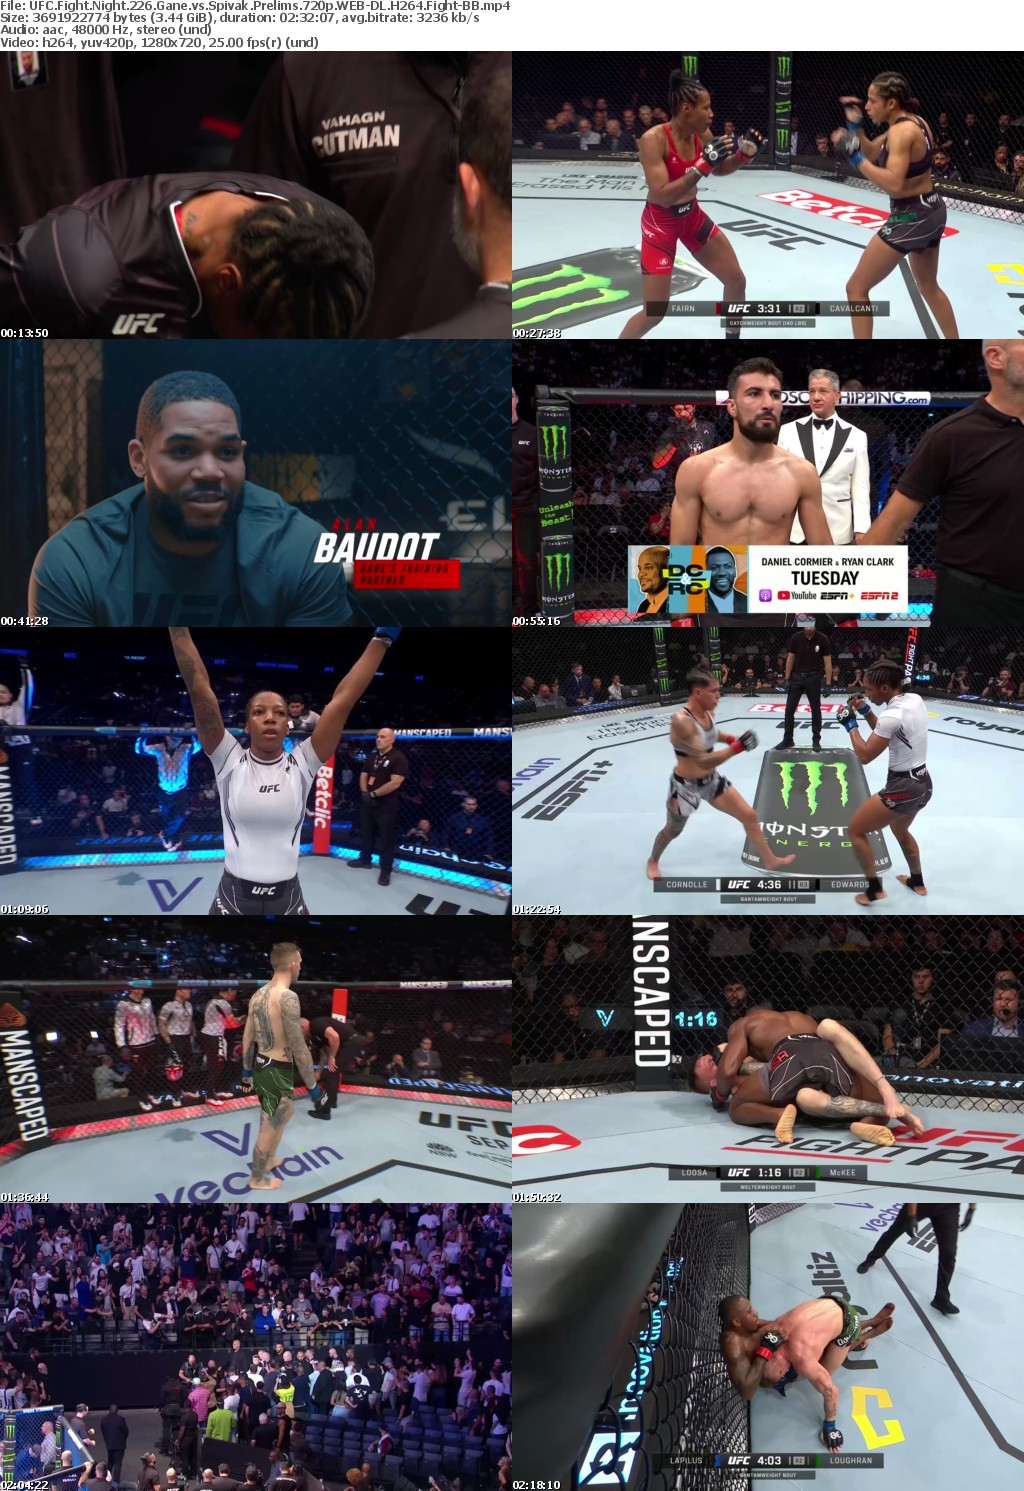 UFC Fight Night 226 Gane vs Spivak Prelims 720p WEB-DL H264 Fight-BB